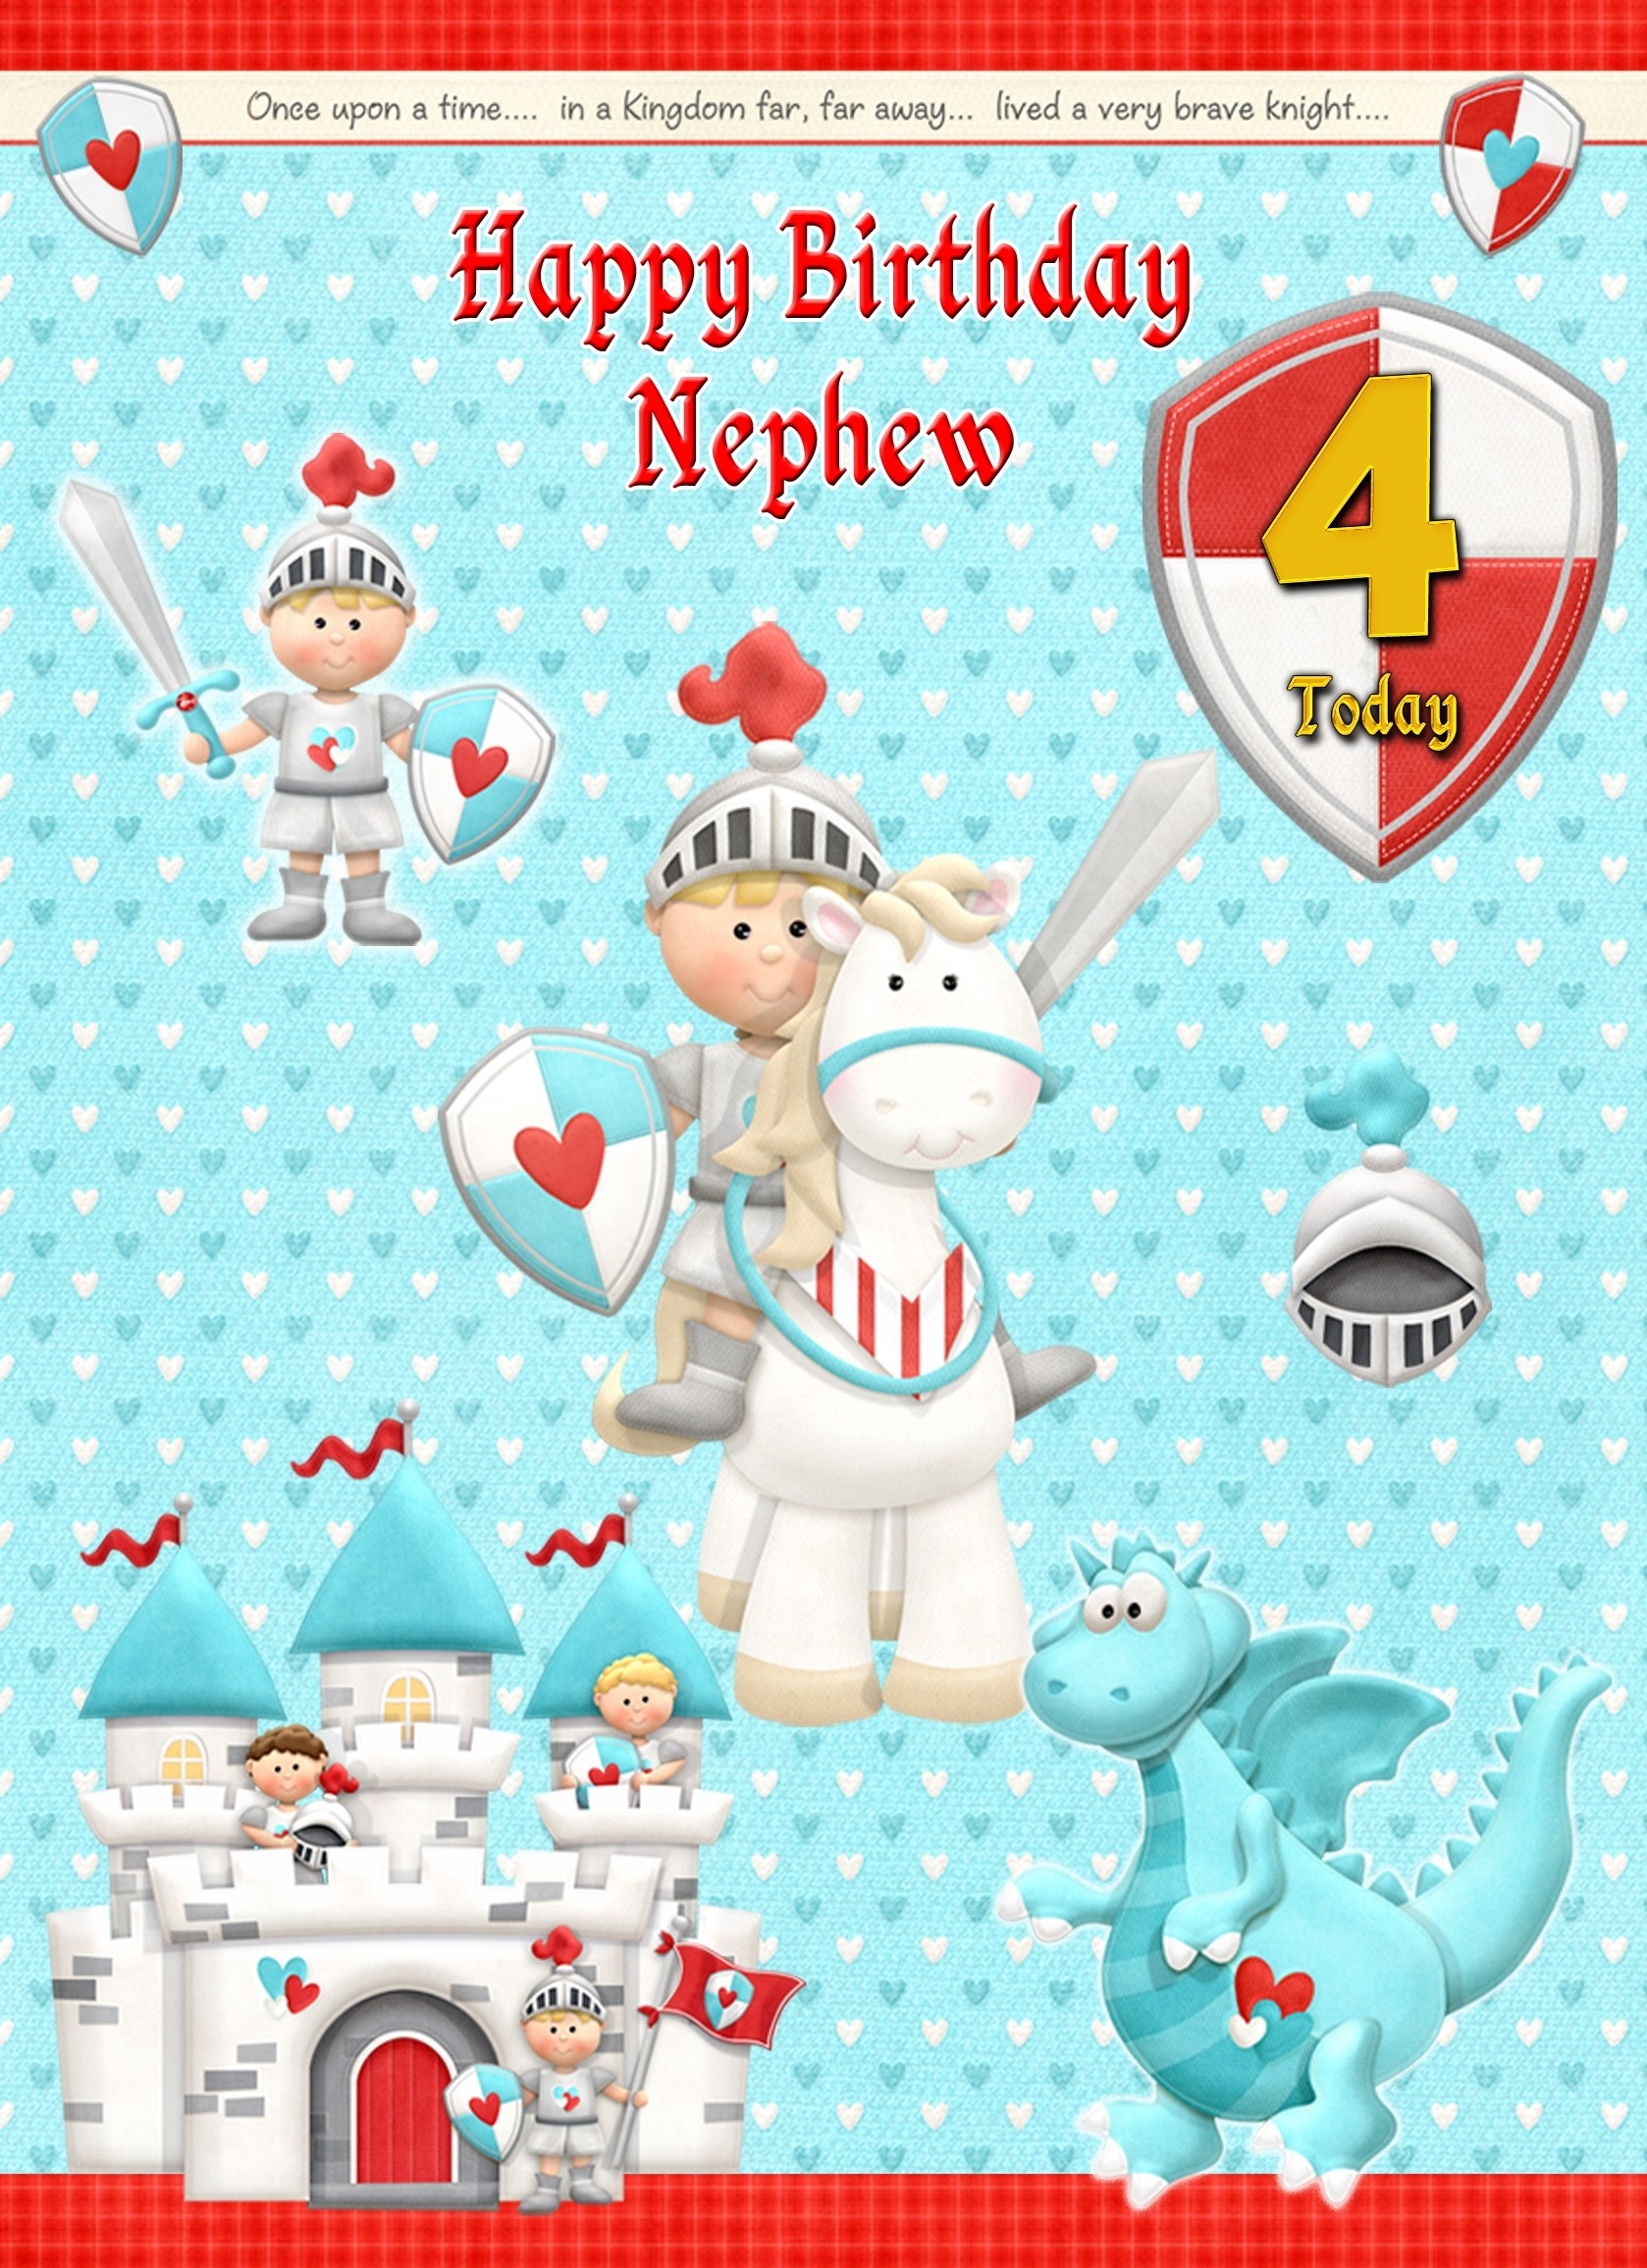 Kids 4th Birthday Hero Knight Cartoon Card for Nephew